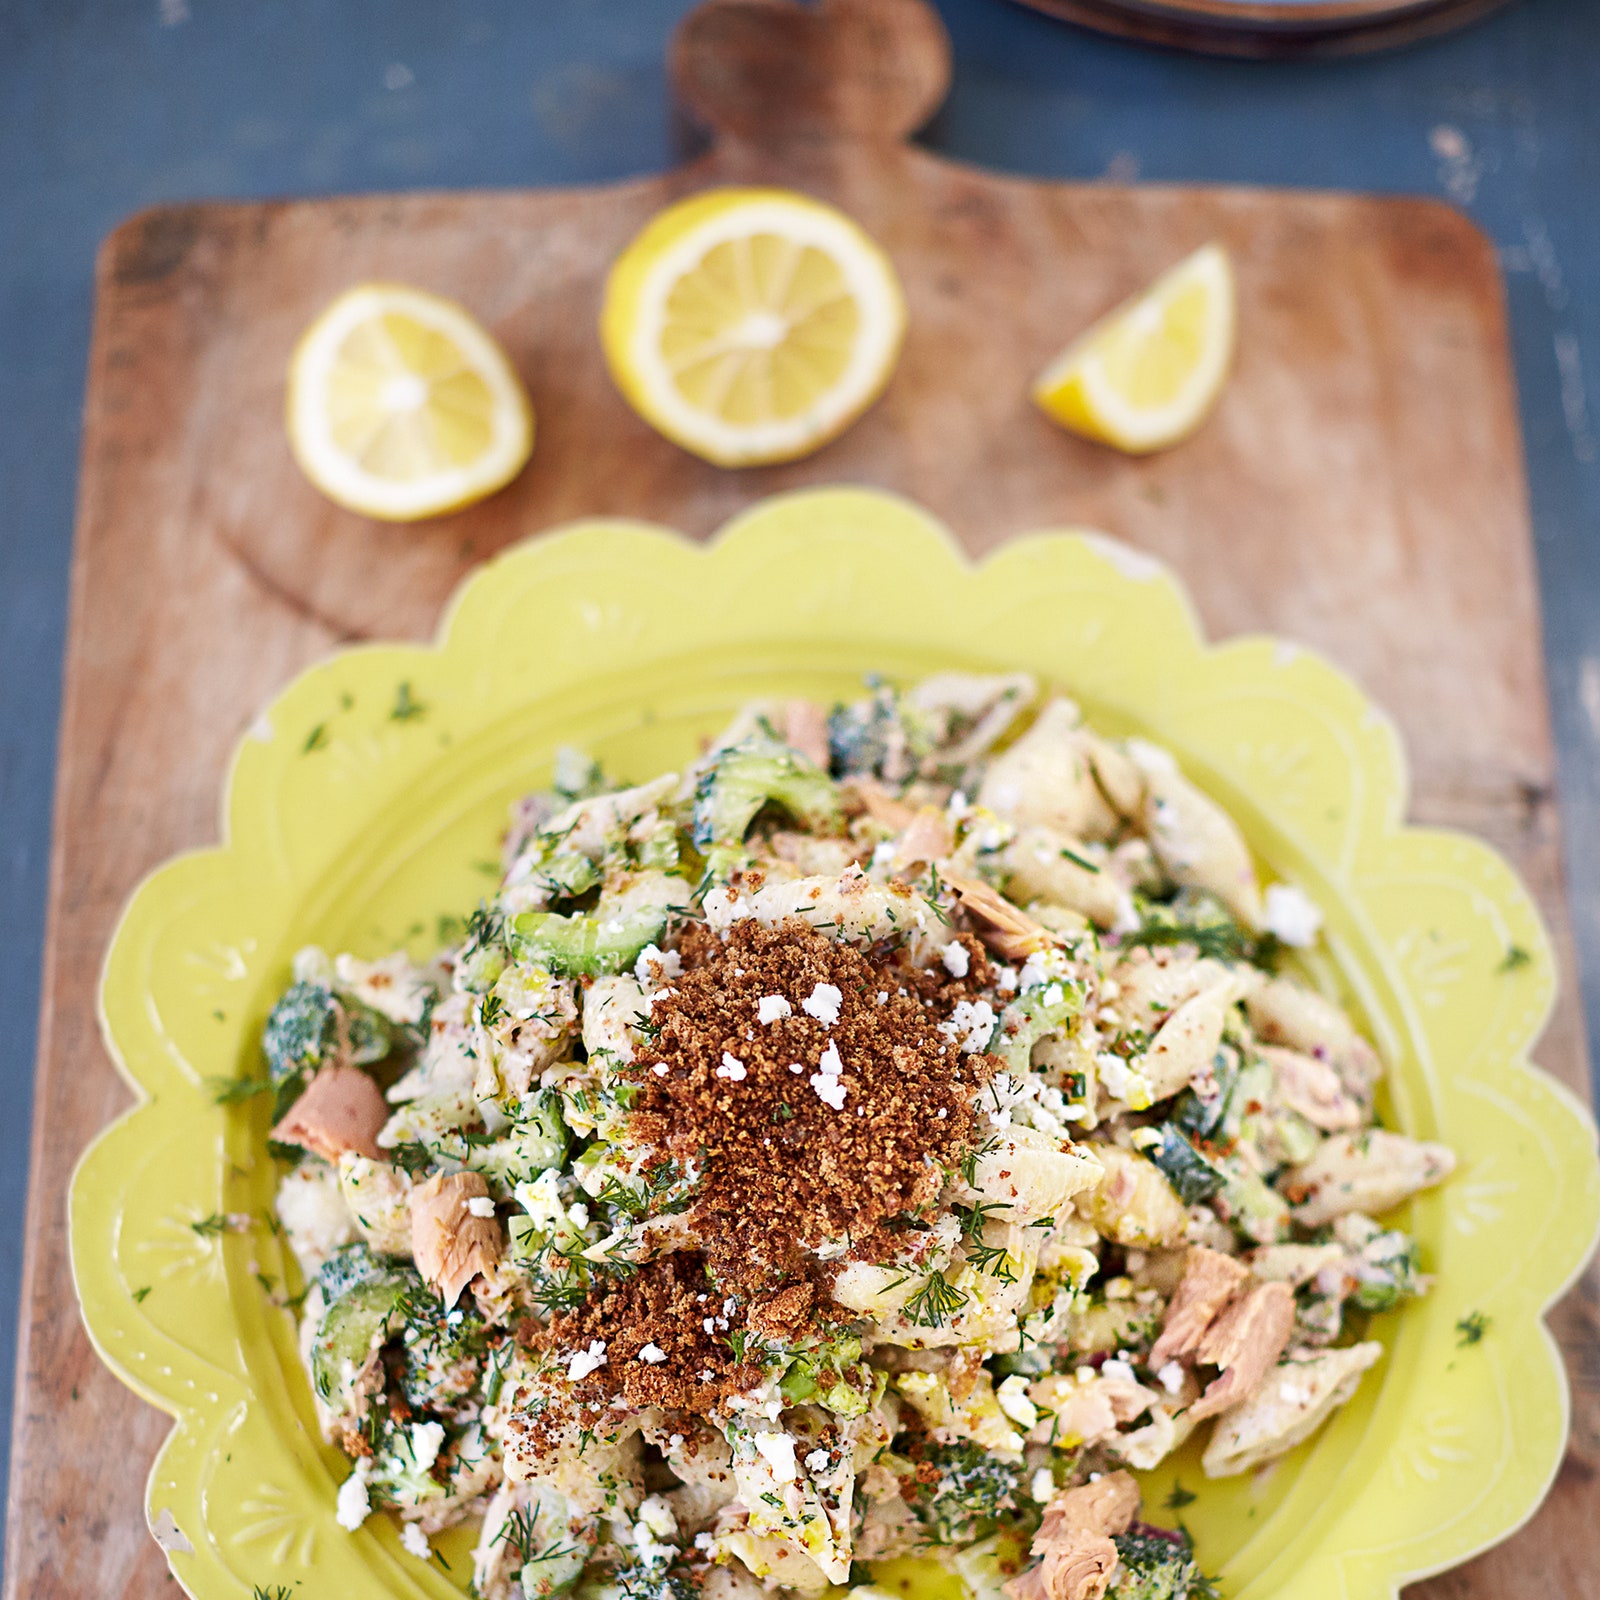 Jamie Oliver's tuna pasta salad with feta and crispy cayenne crumbs